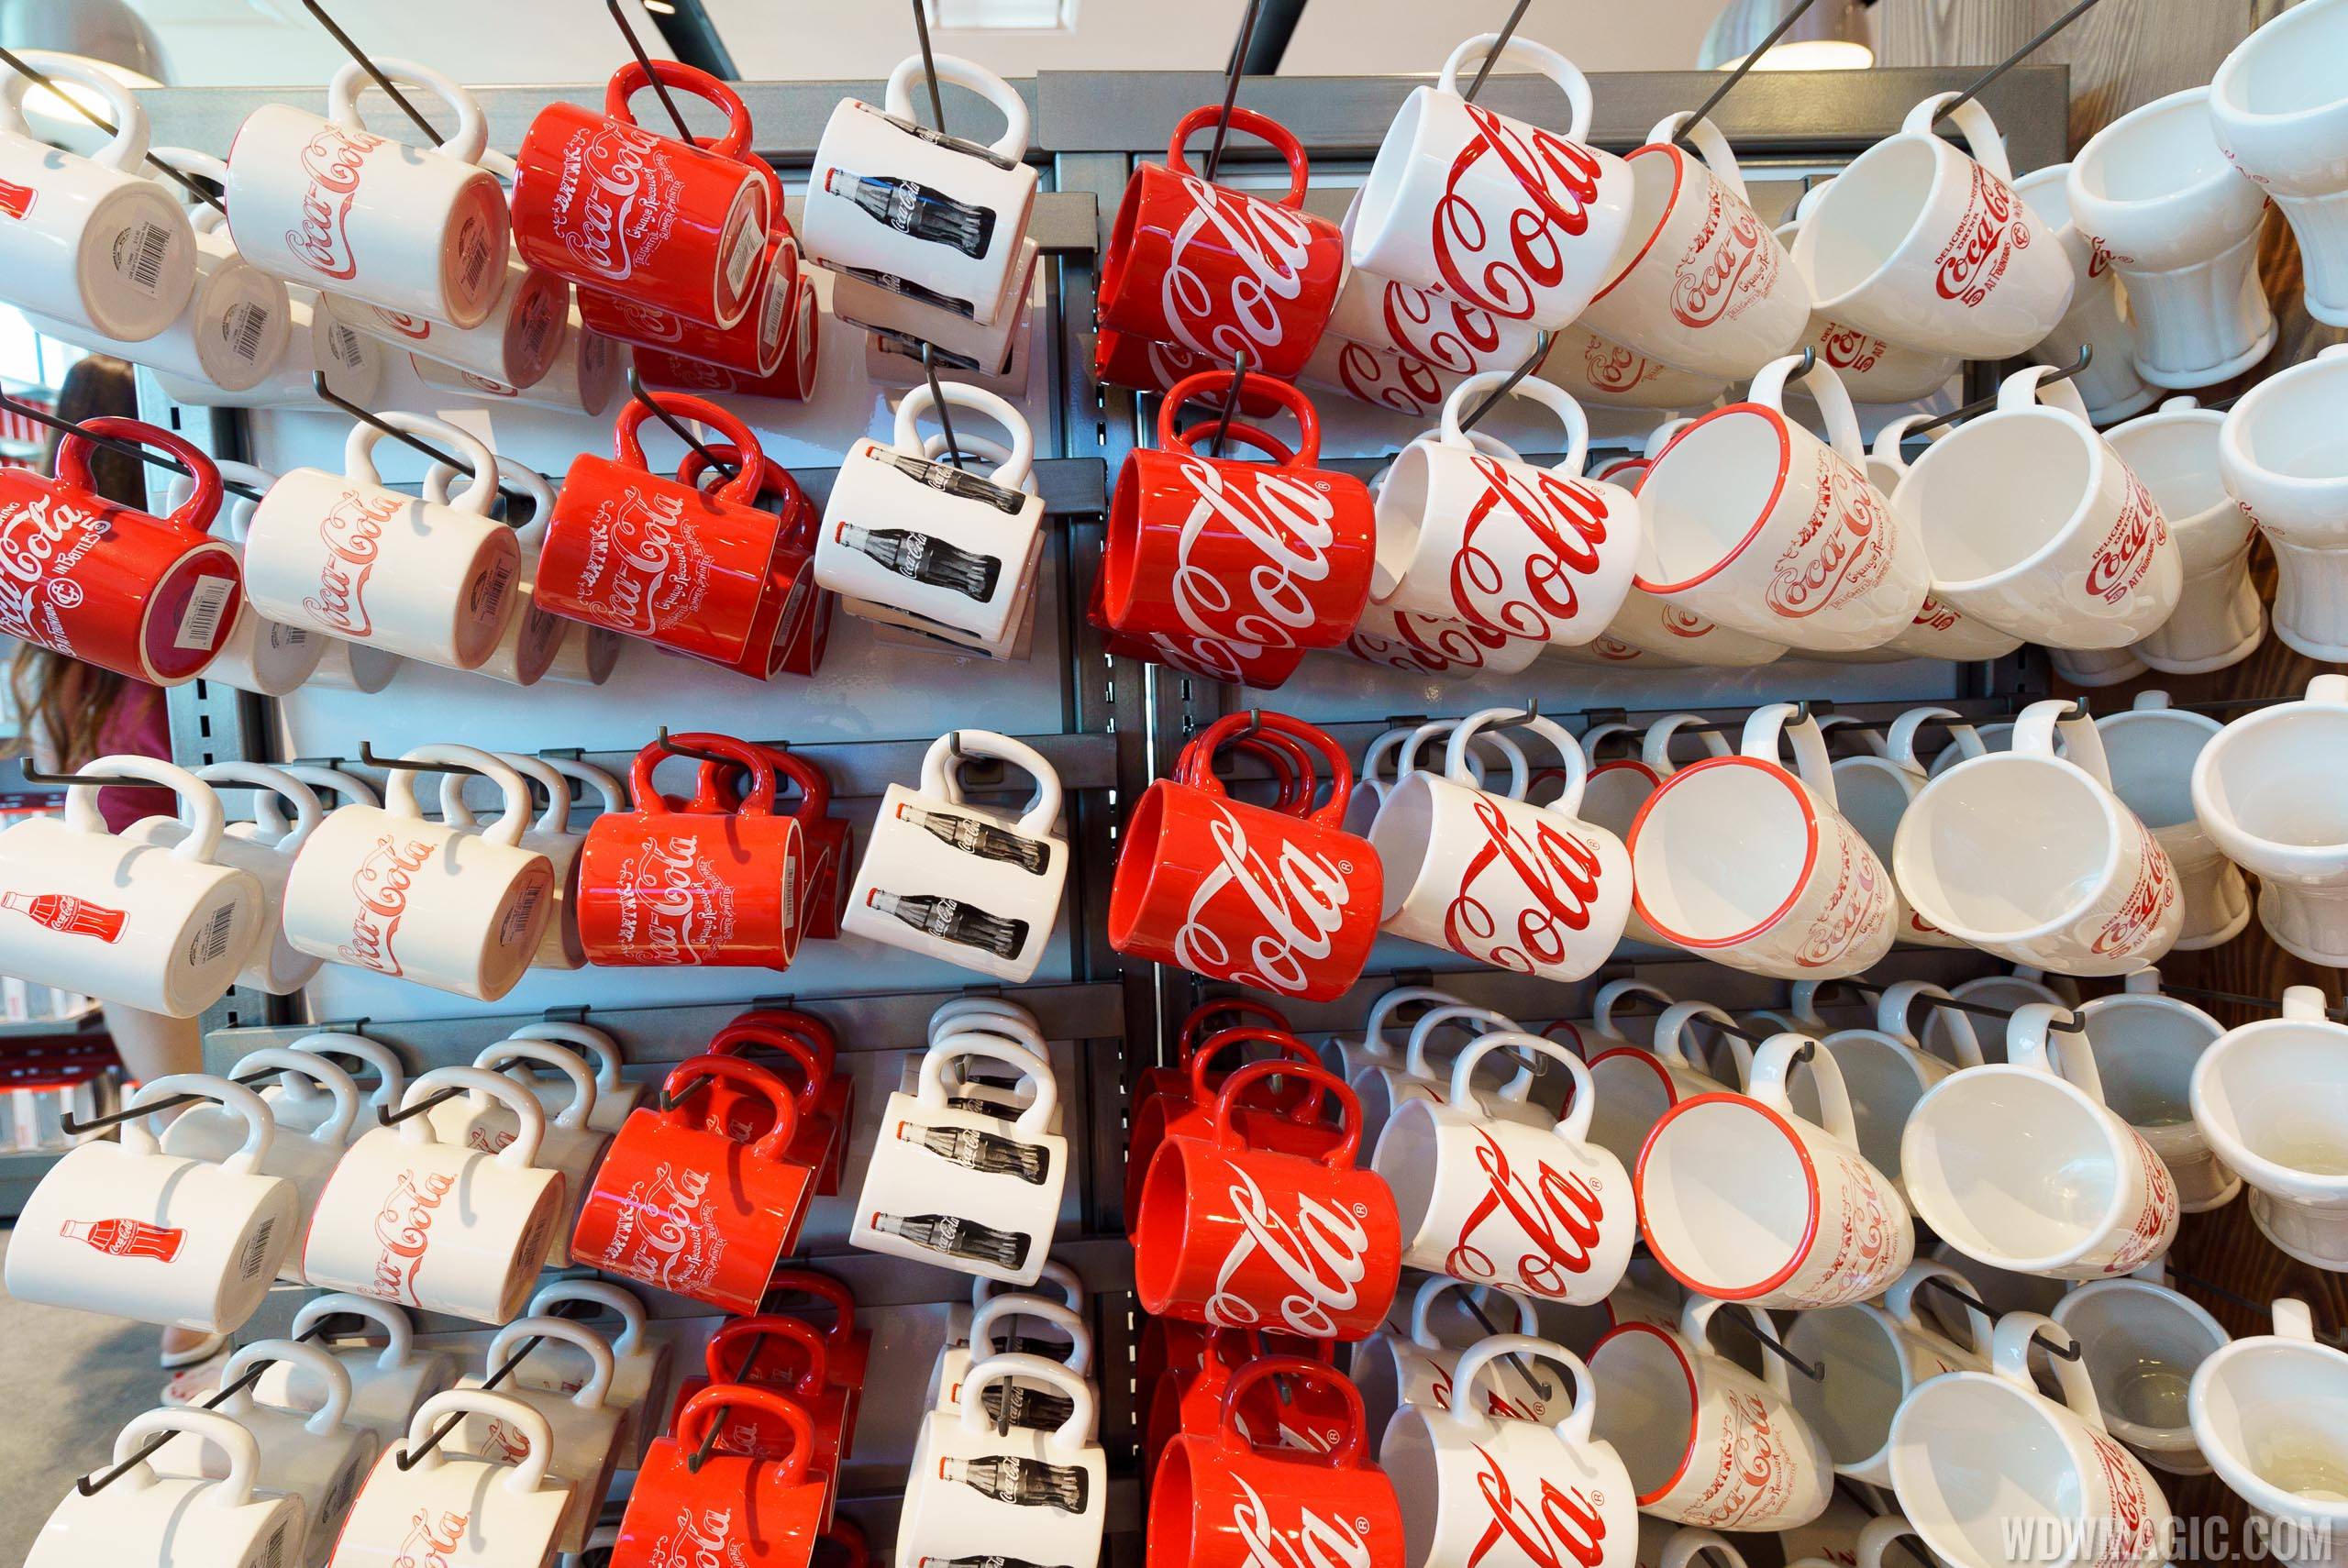 Coca-Cola Store Orlando - Mugs